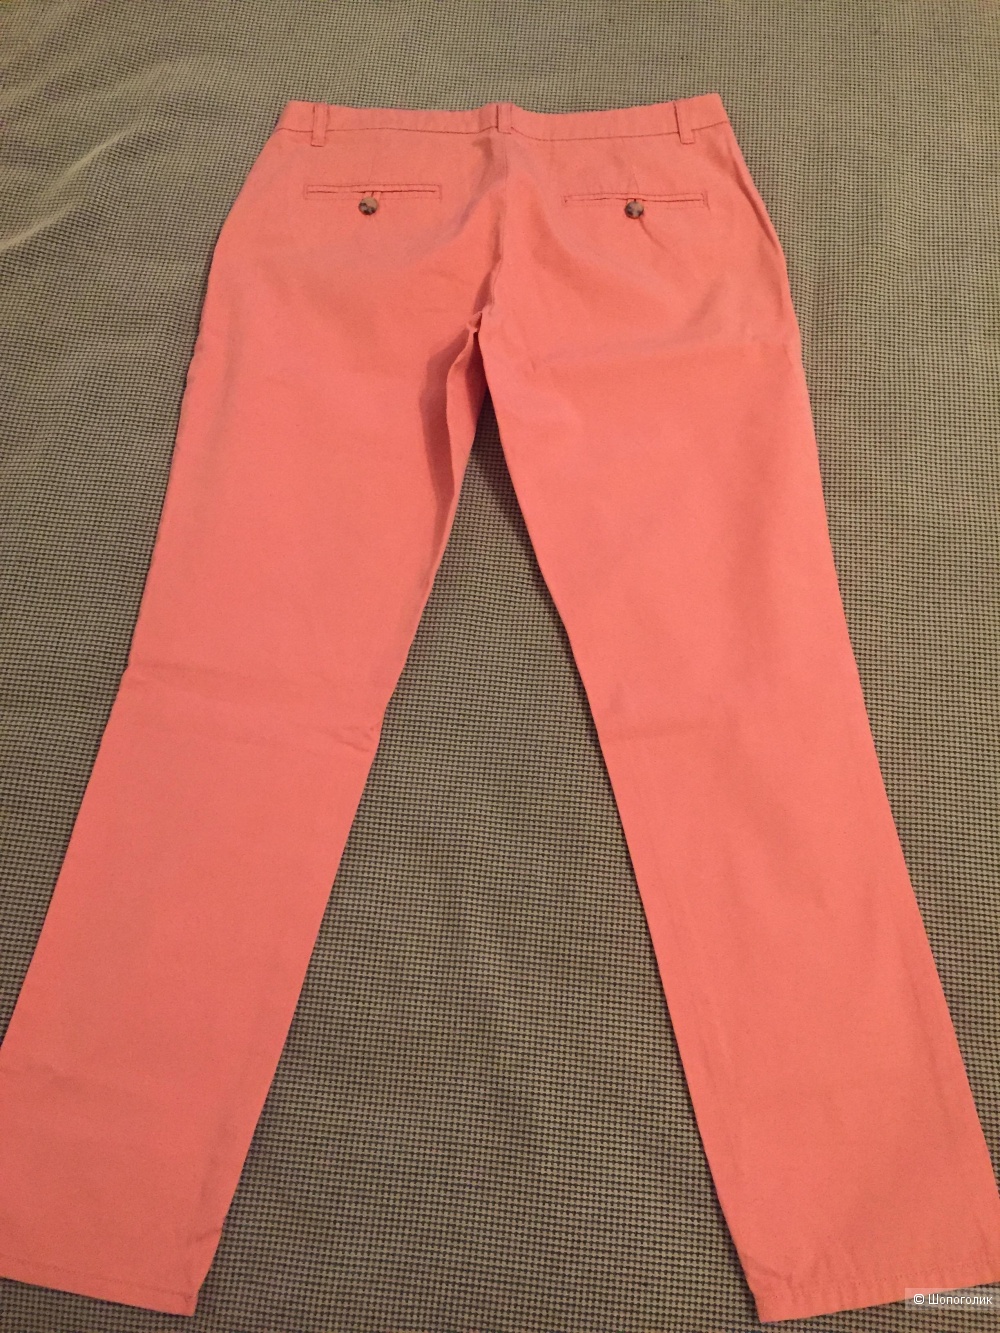 Женские брюки Mango ,48 размер